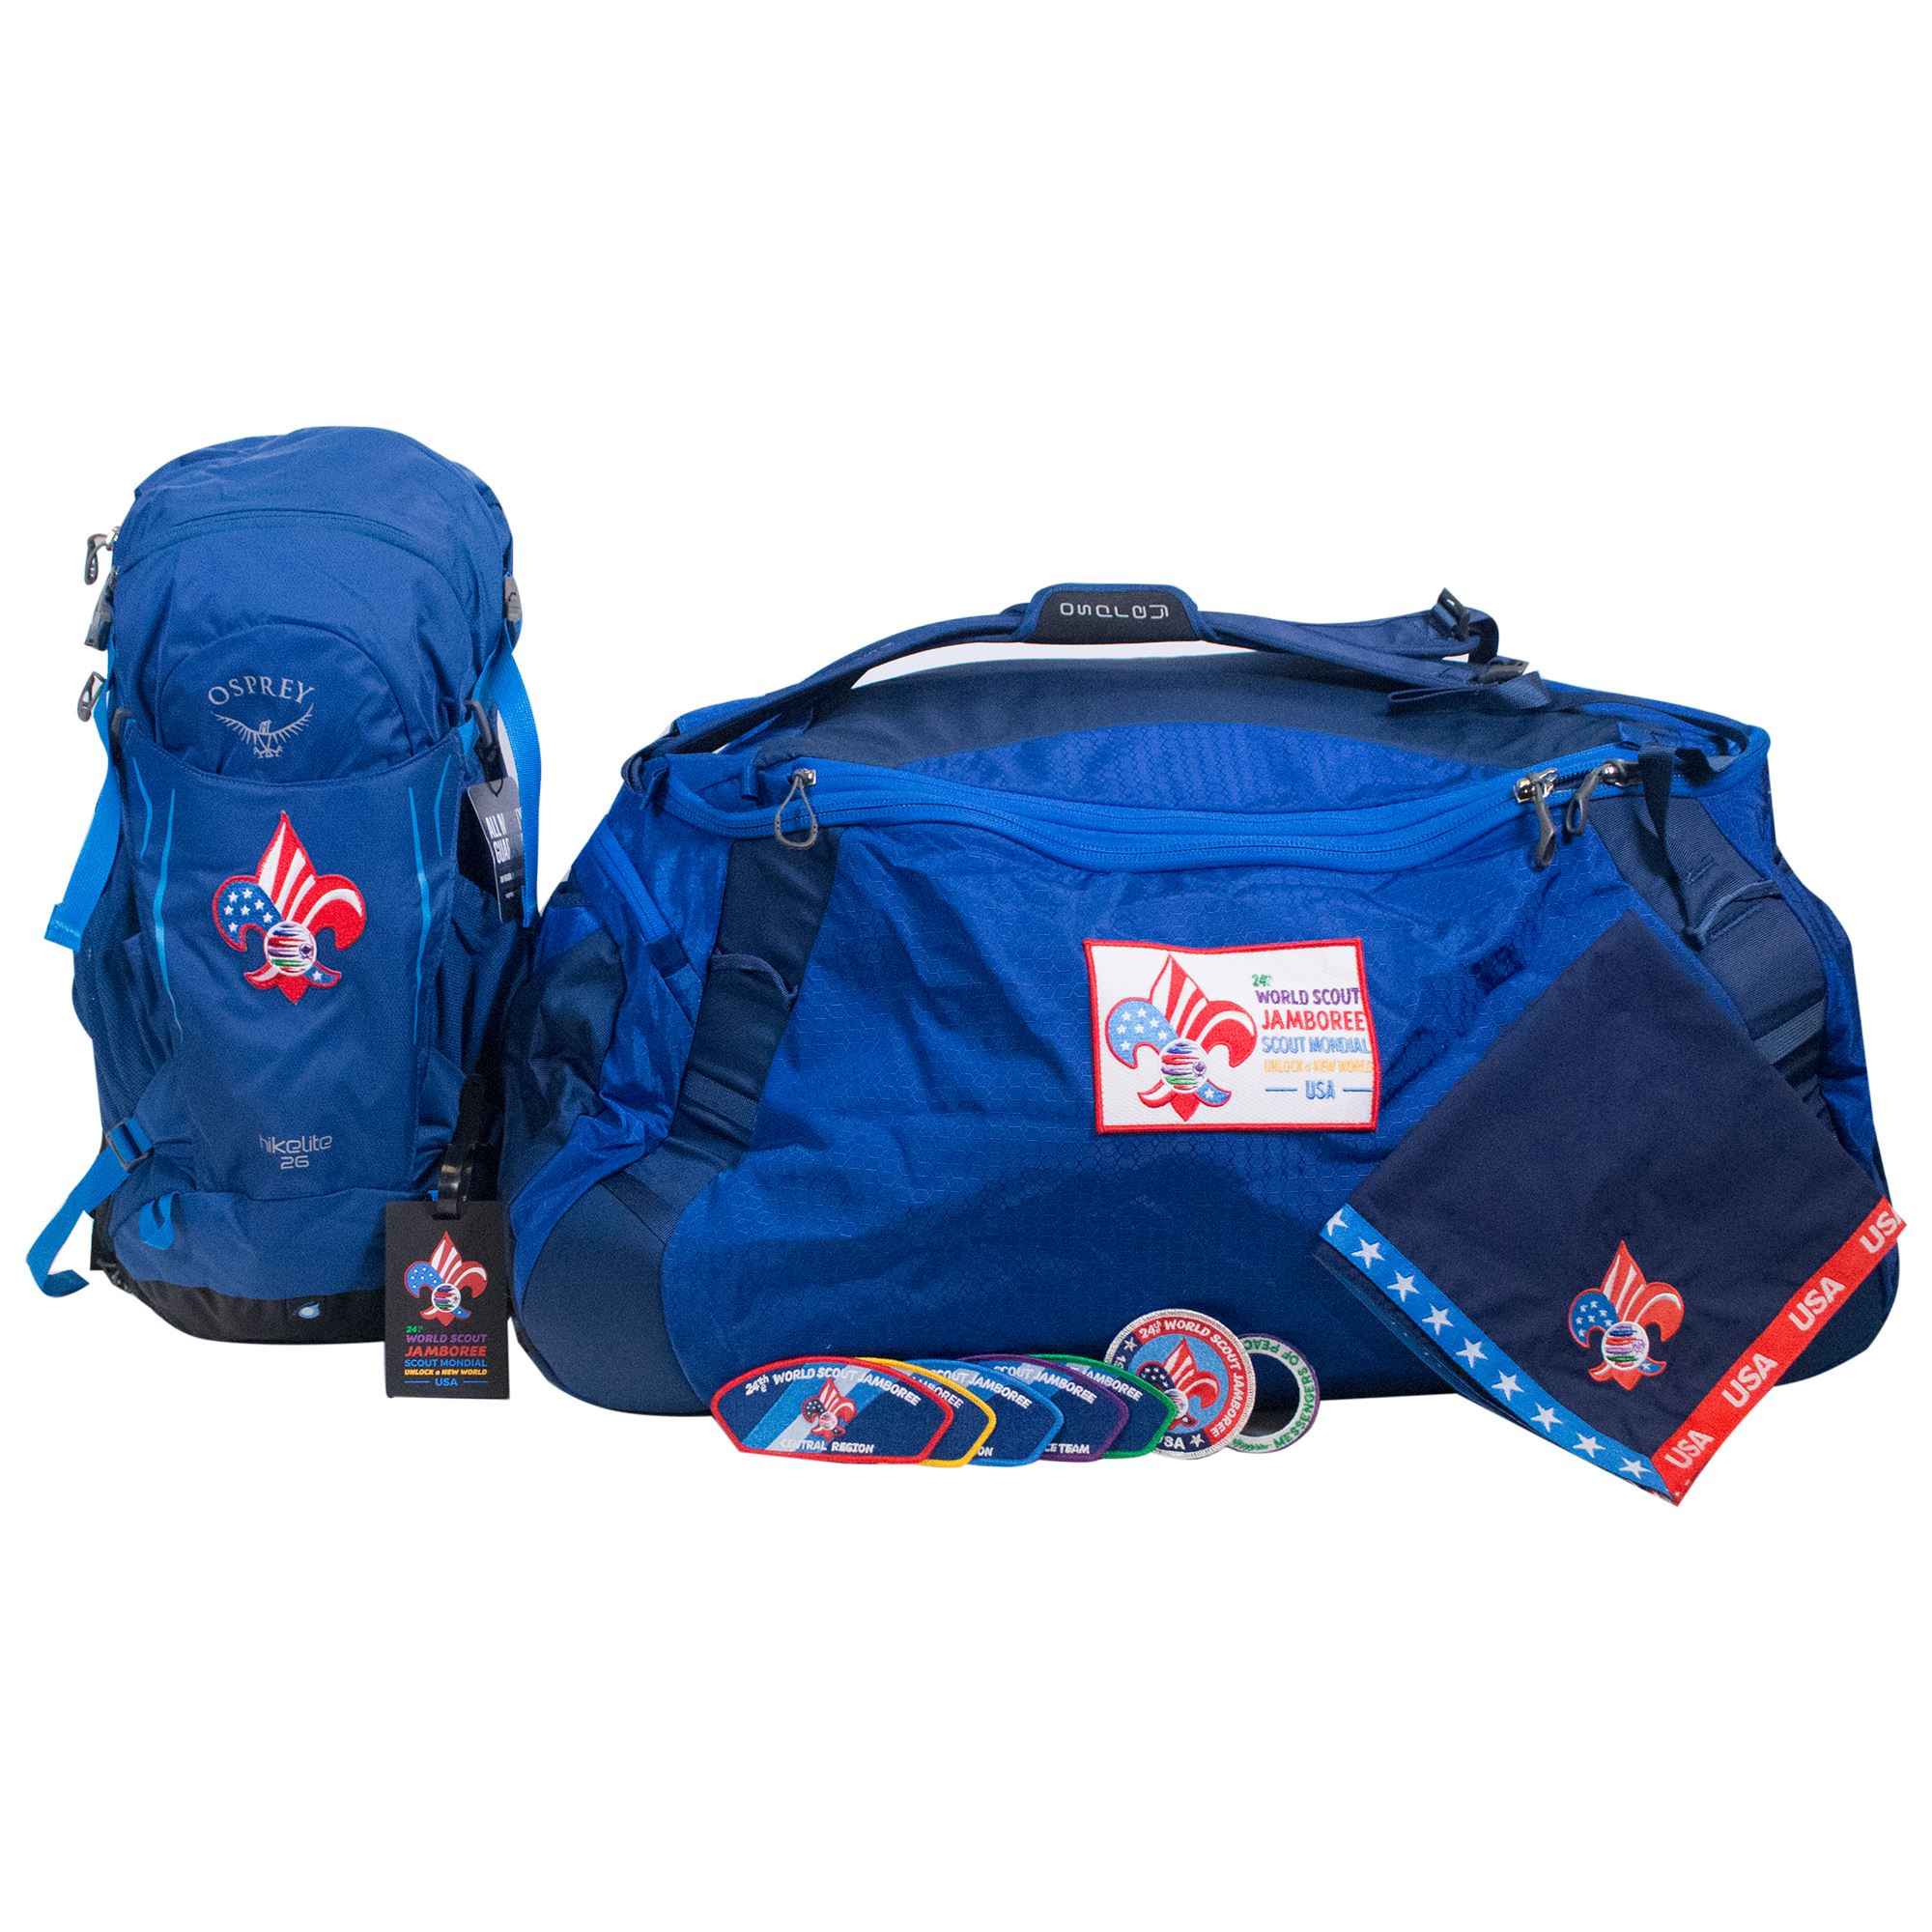 24th World Scout Jamboree 2019 Boy Scout Badge USA WSJ luggage bag tag x 2 Lim 